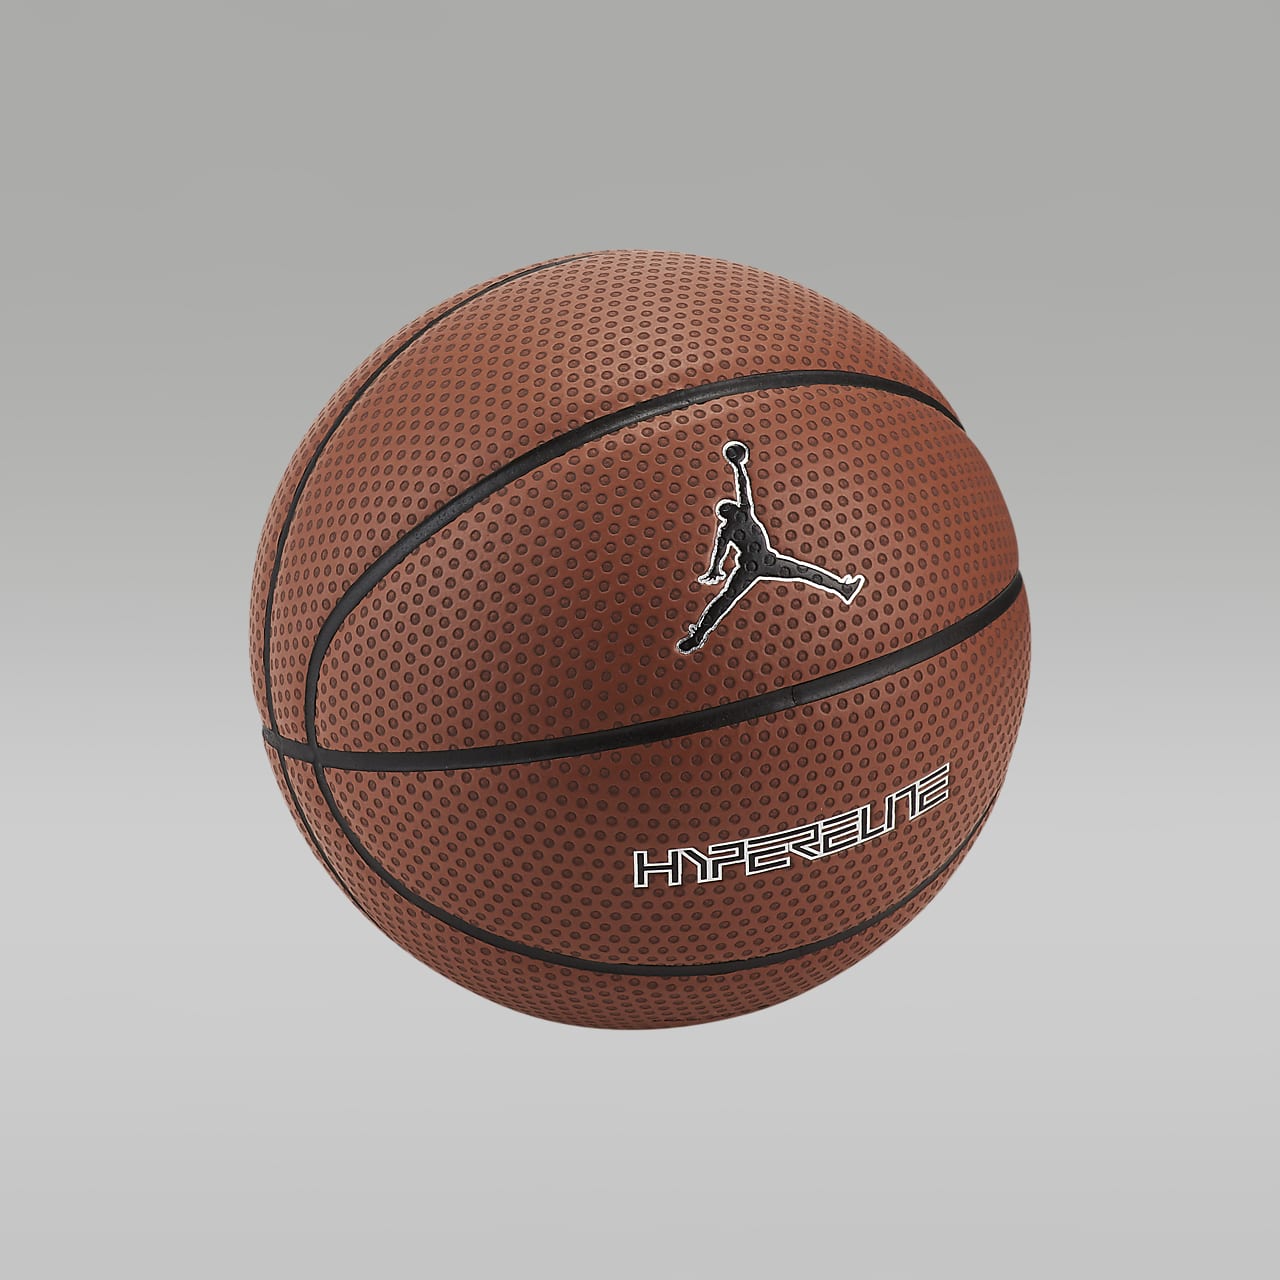 Jordan Hyper Elite 8P Basketball (Size 7)